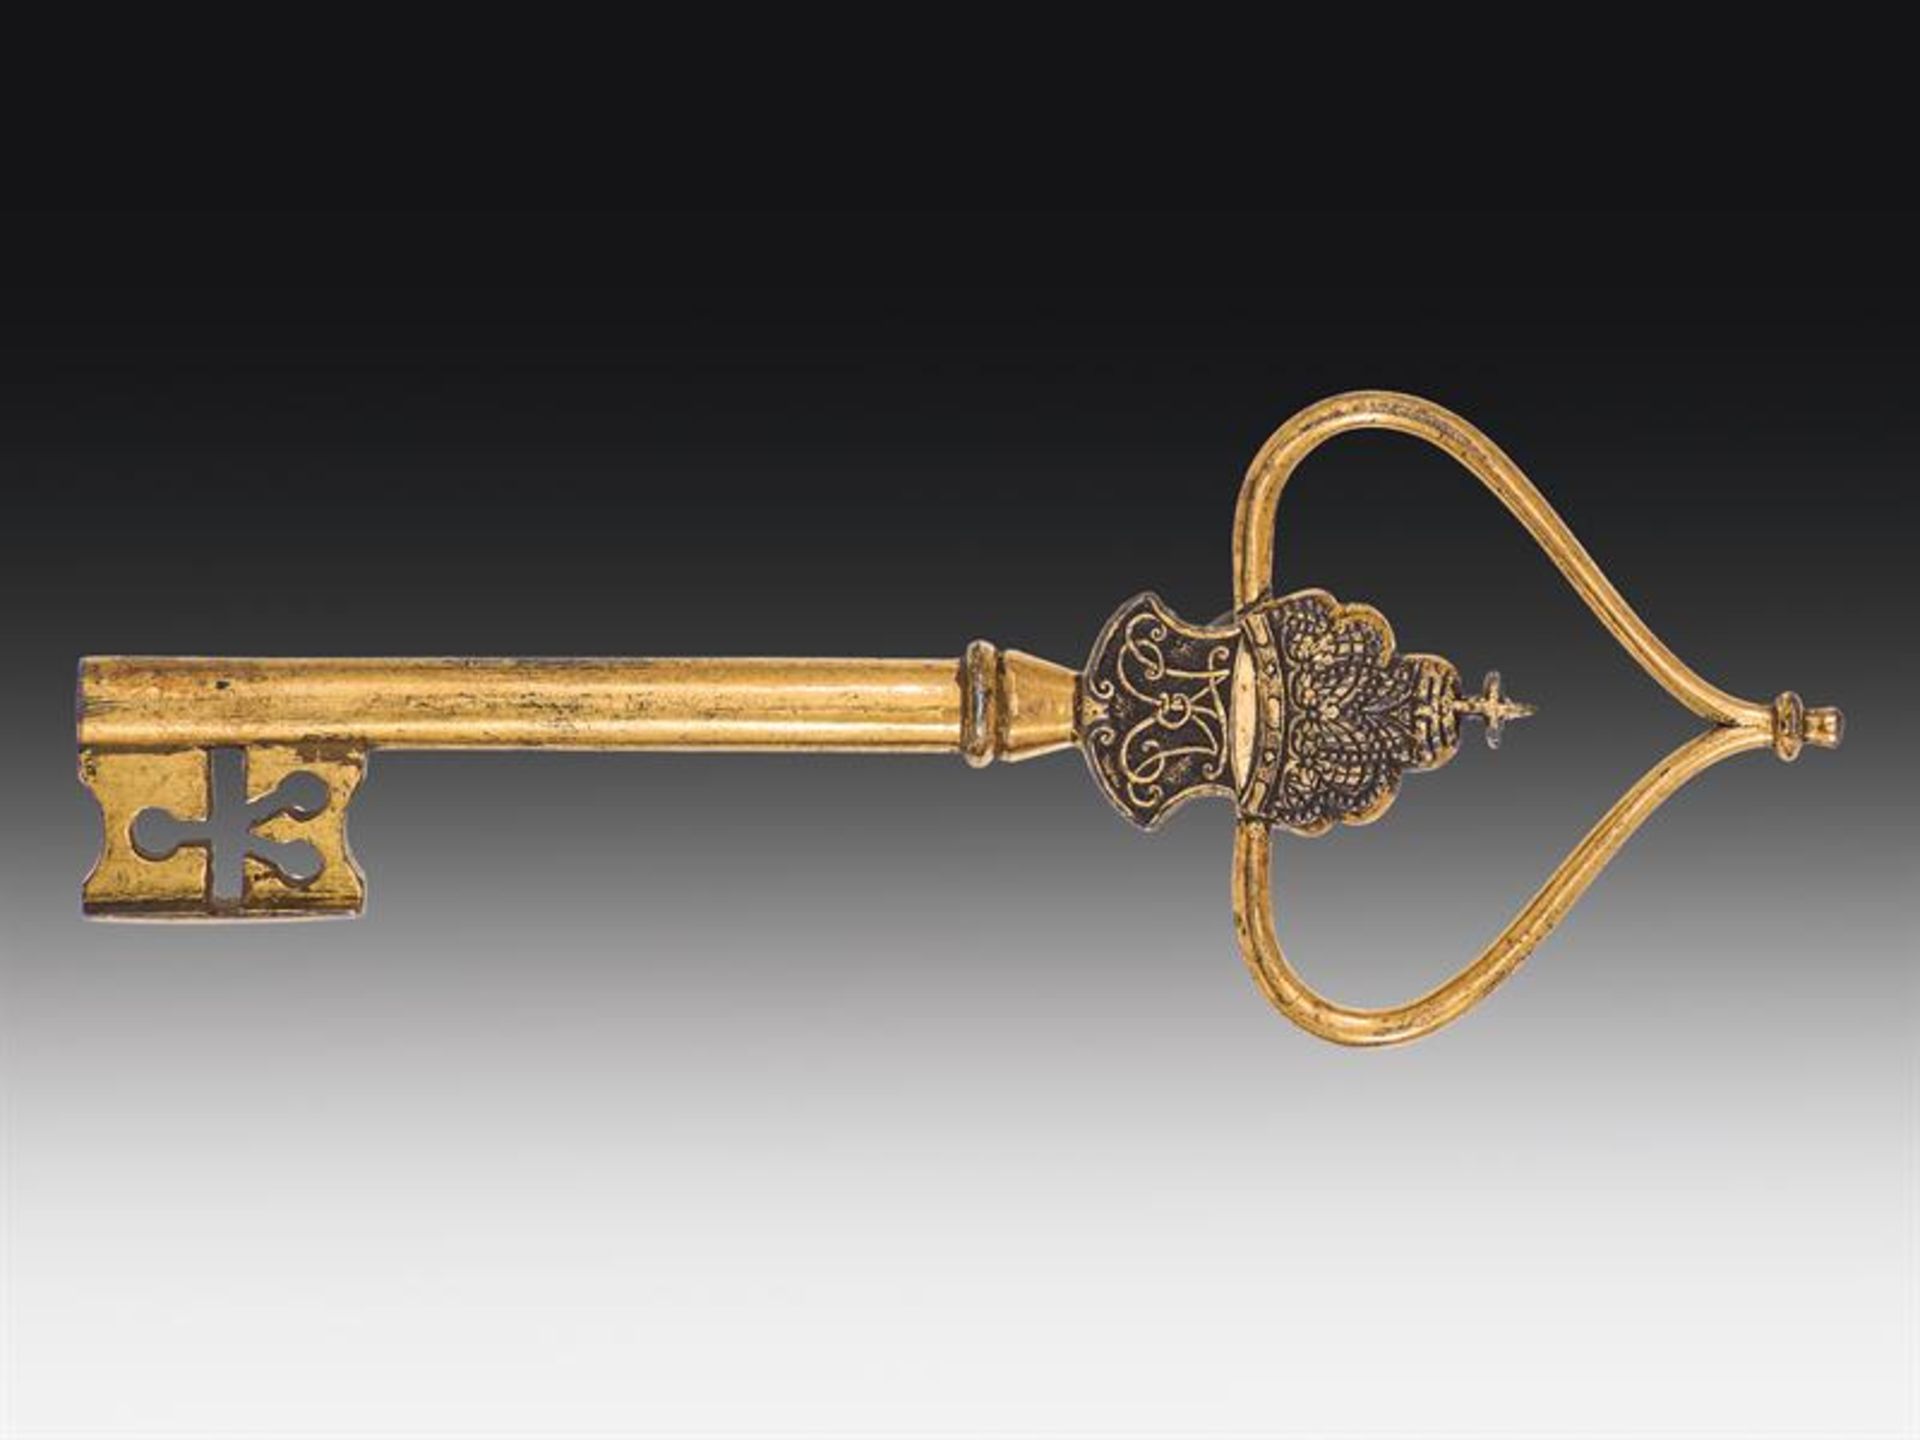 Maria Theresia's key "Kammerherrenschlüssel"